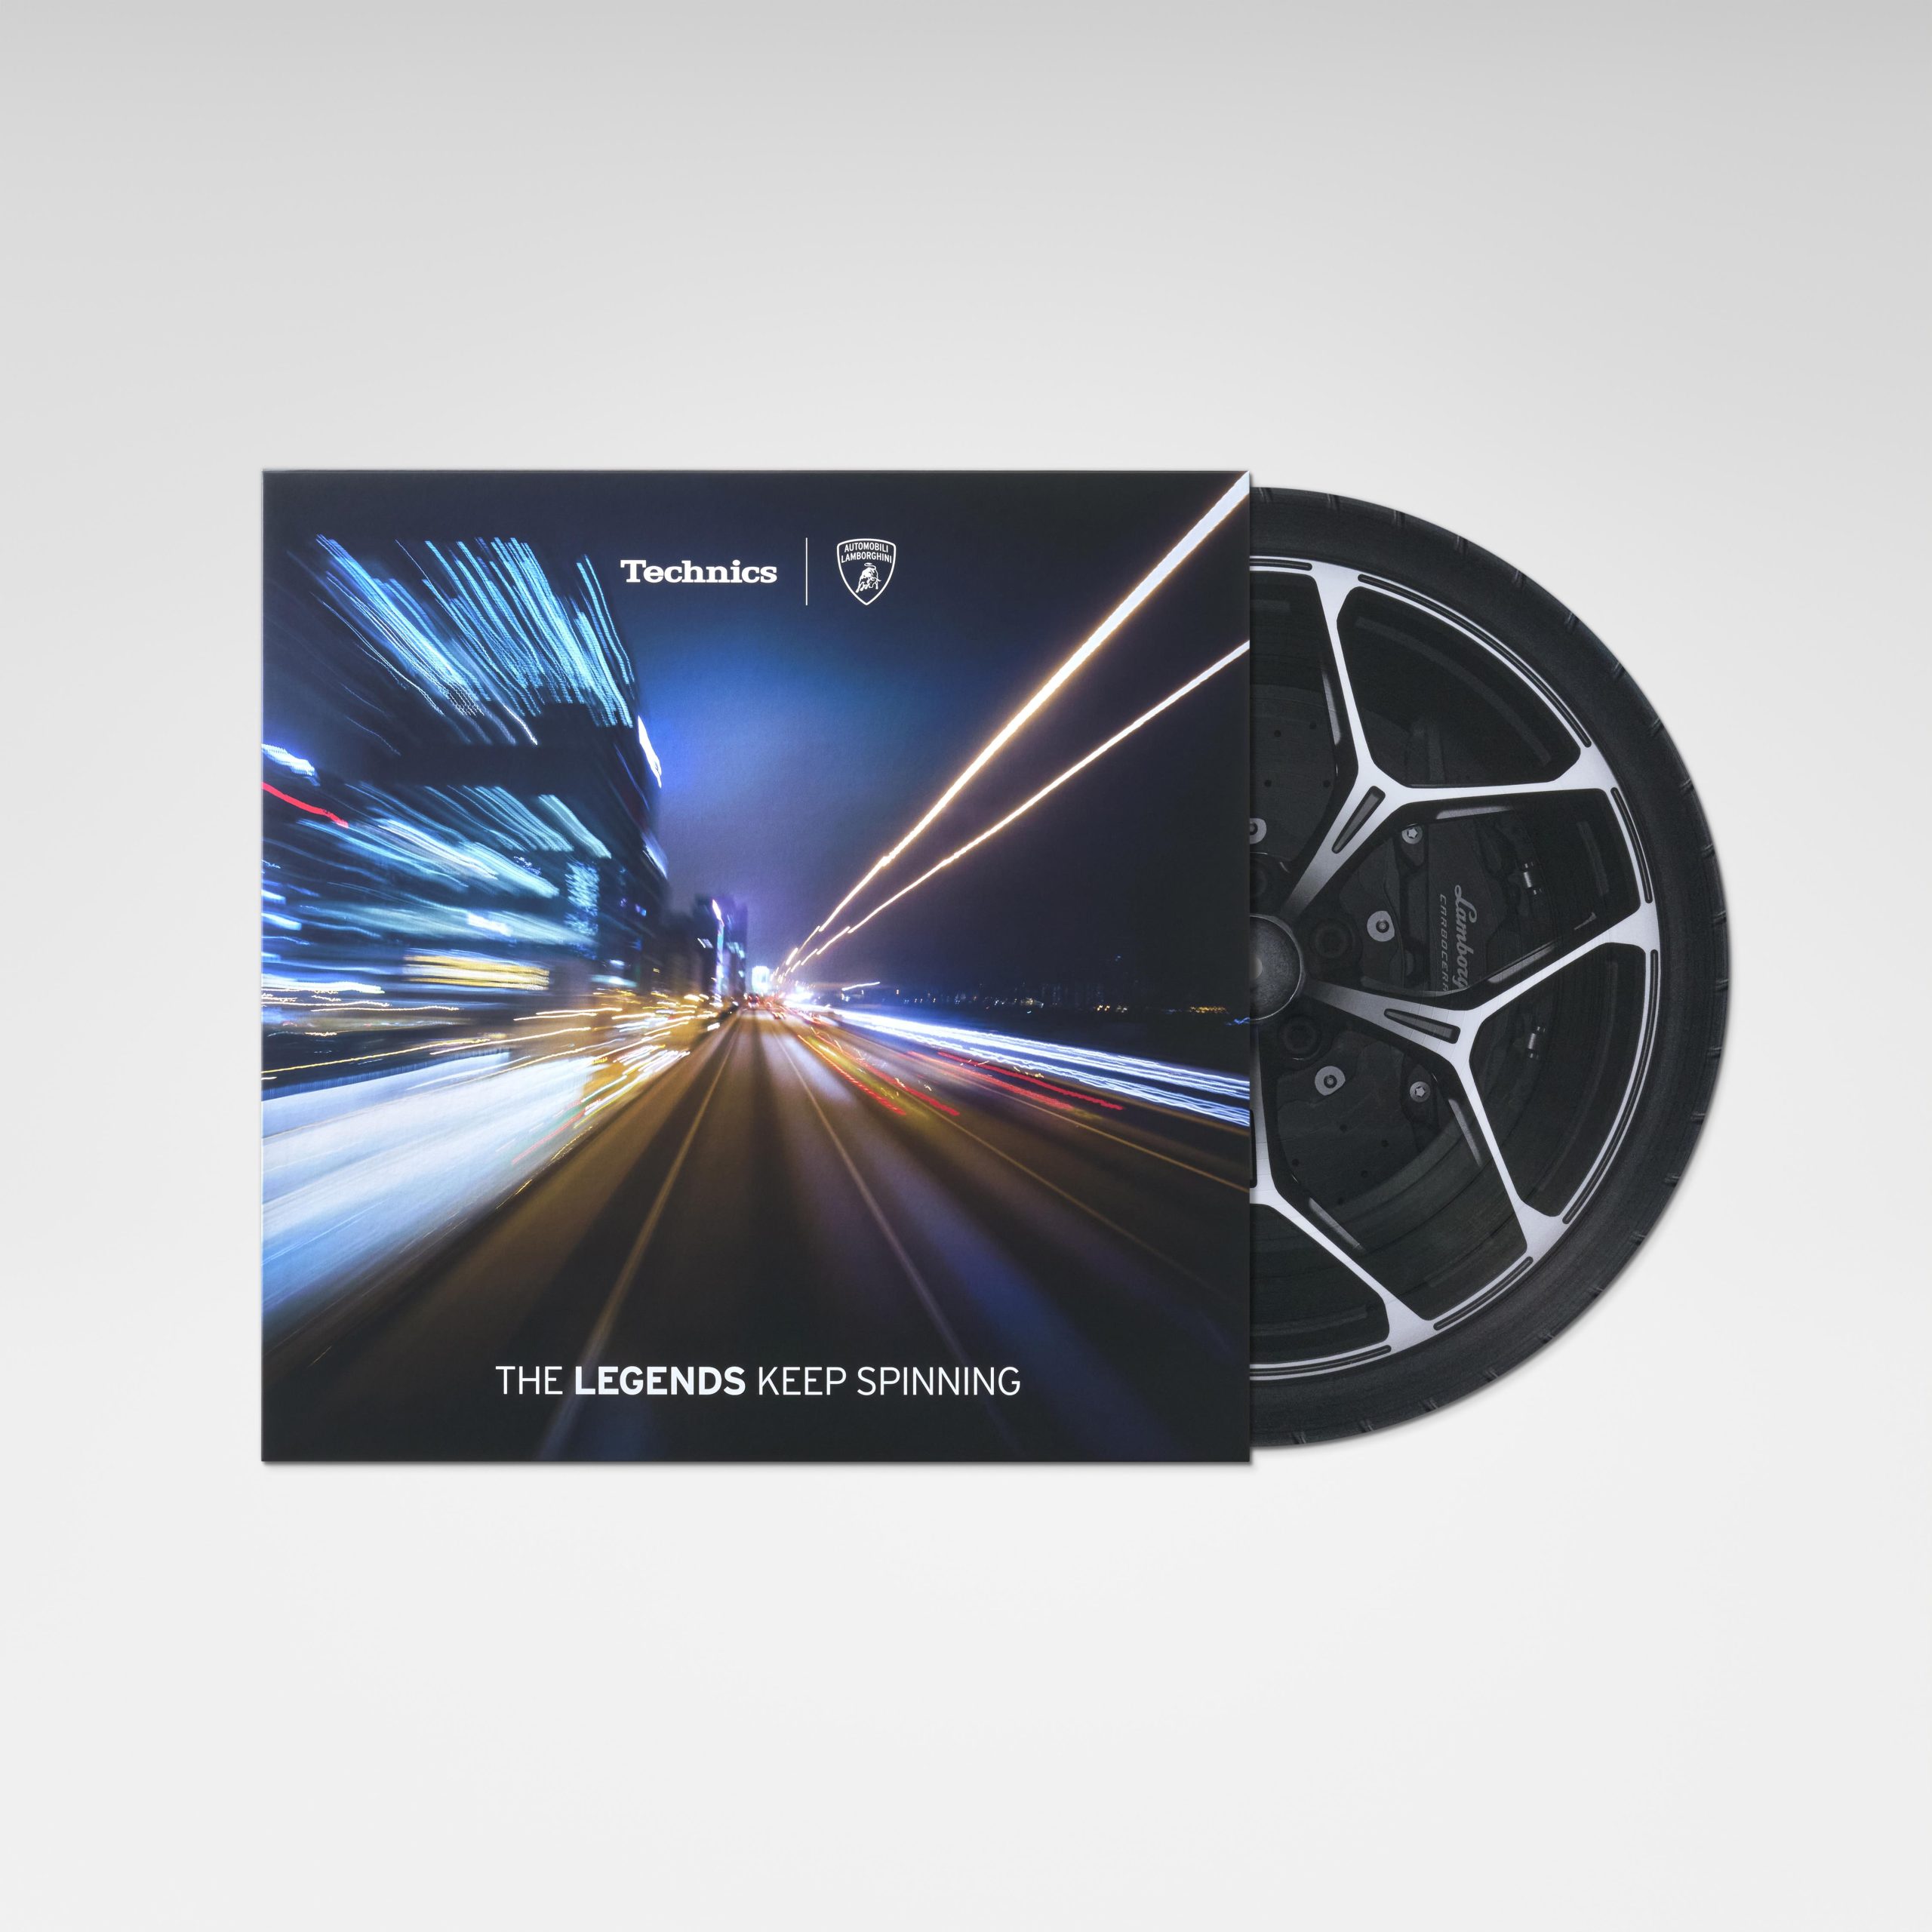 Lamborghini’s Greatest Hits Album is Now Available on Vinyl